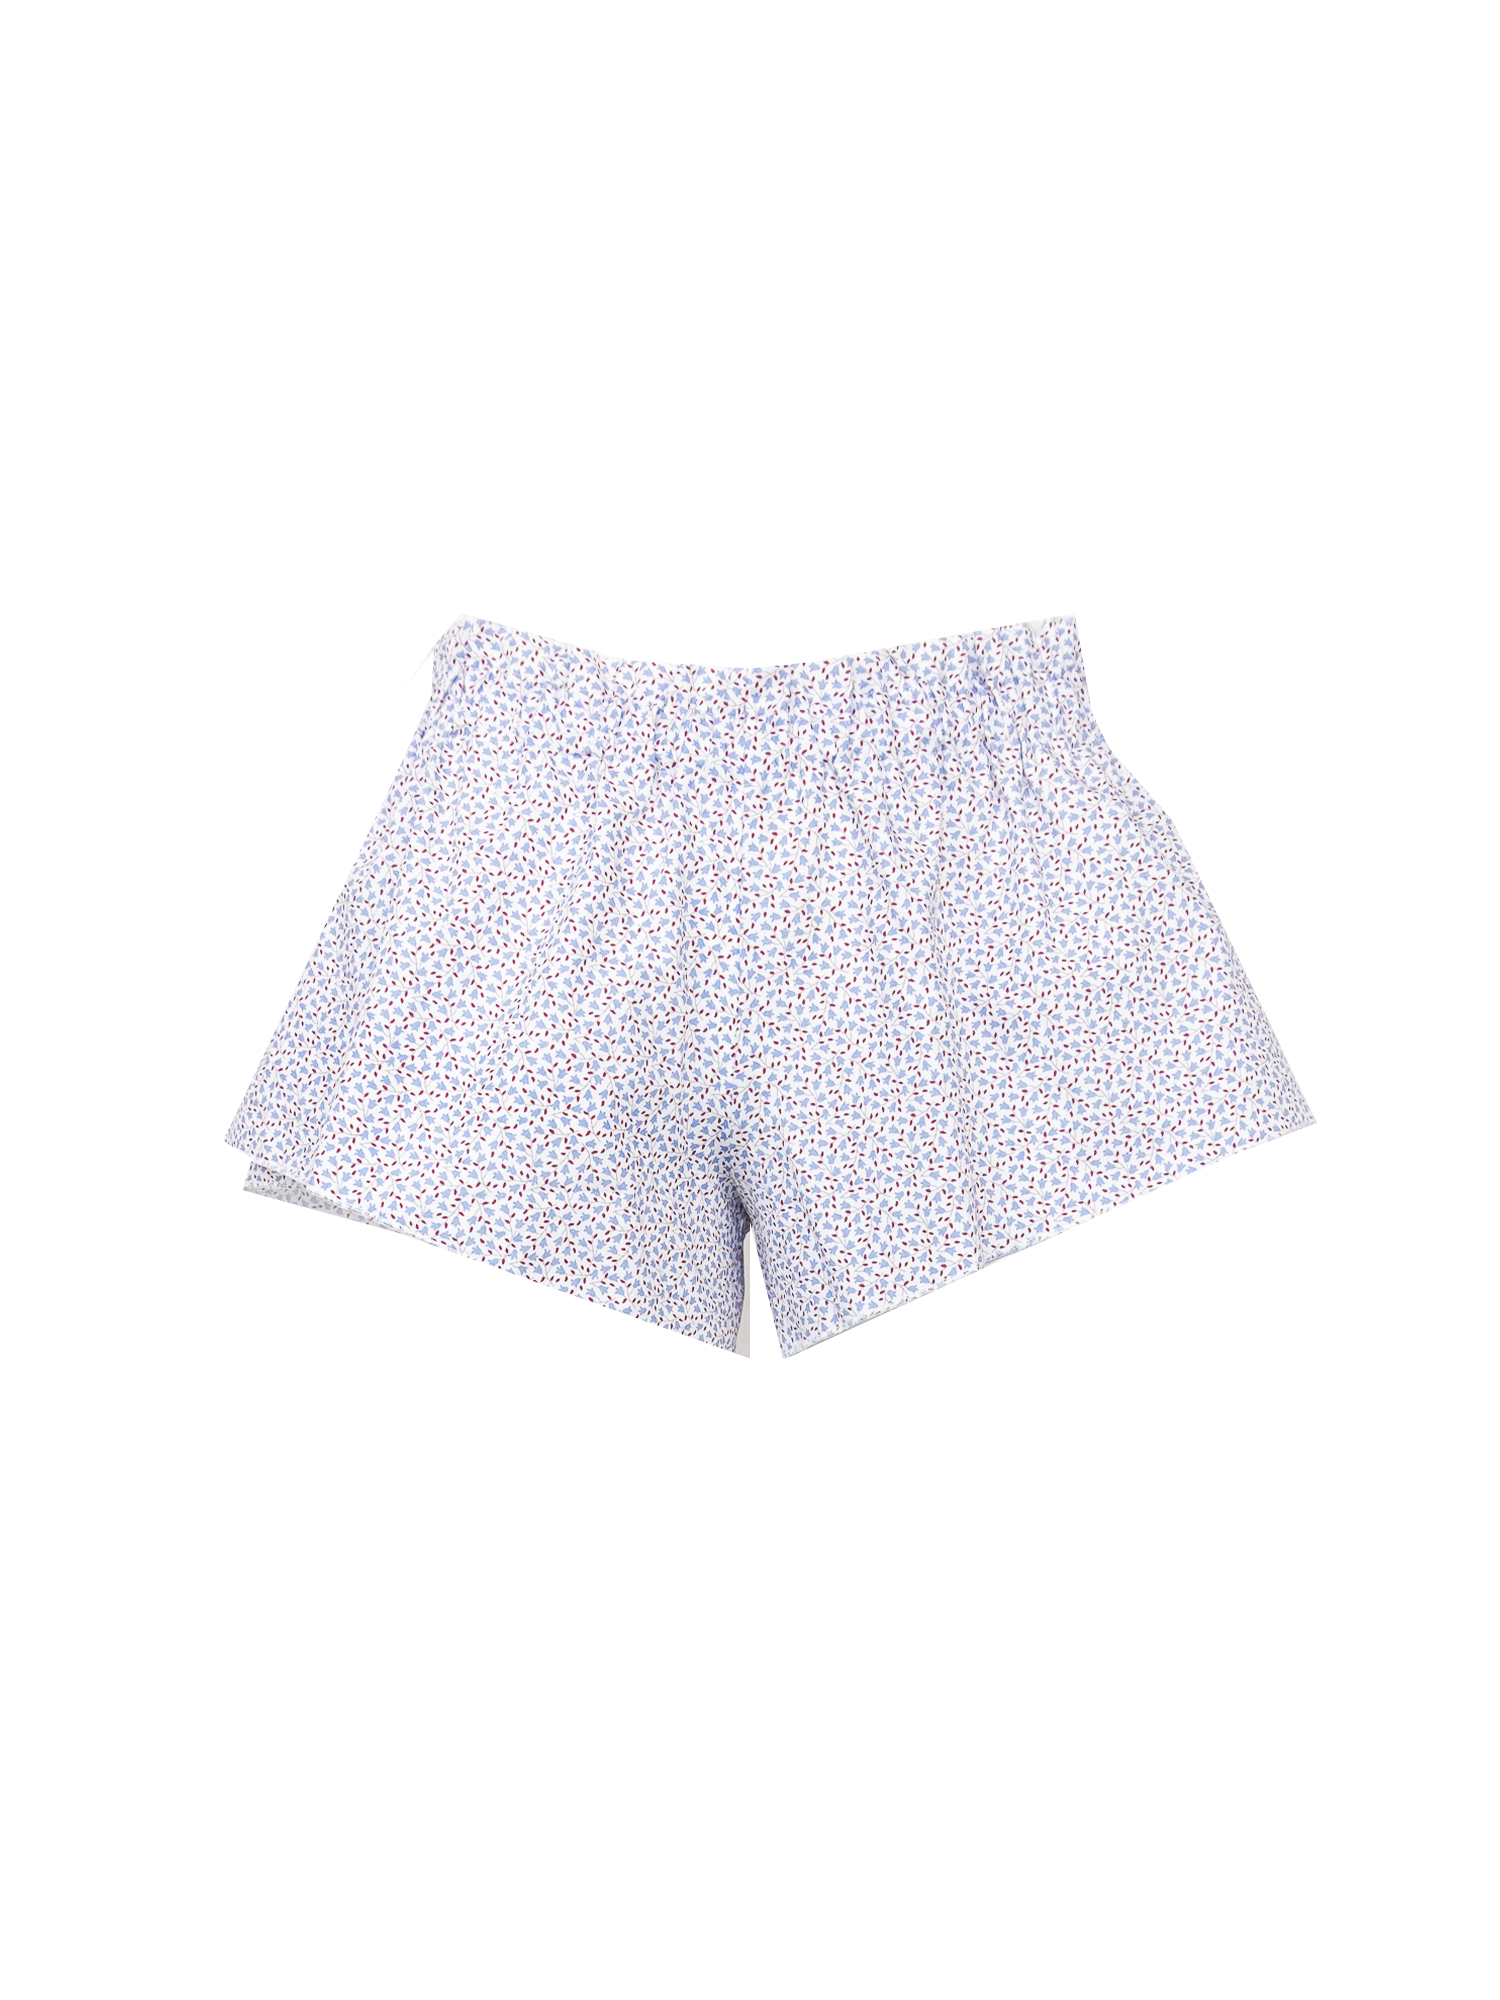 AMARANTA - cotton shorts in Nets print